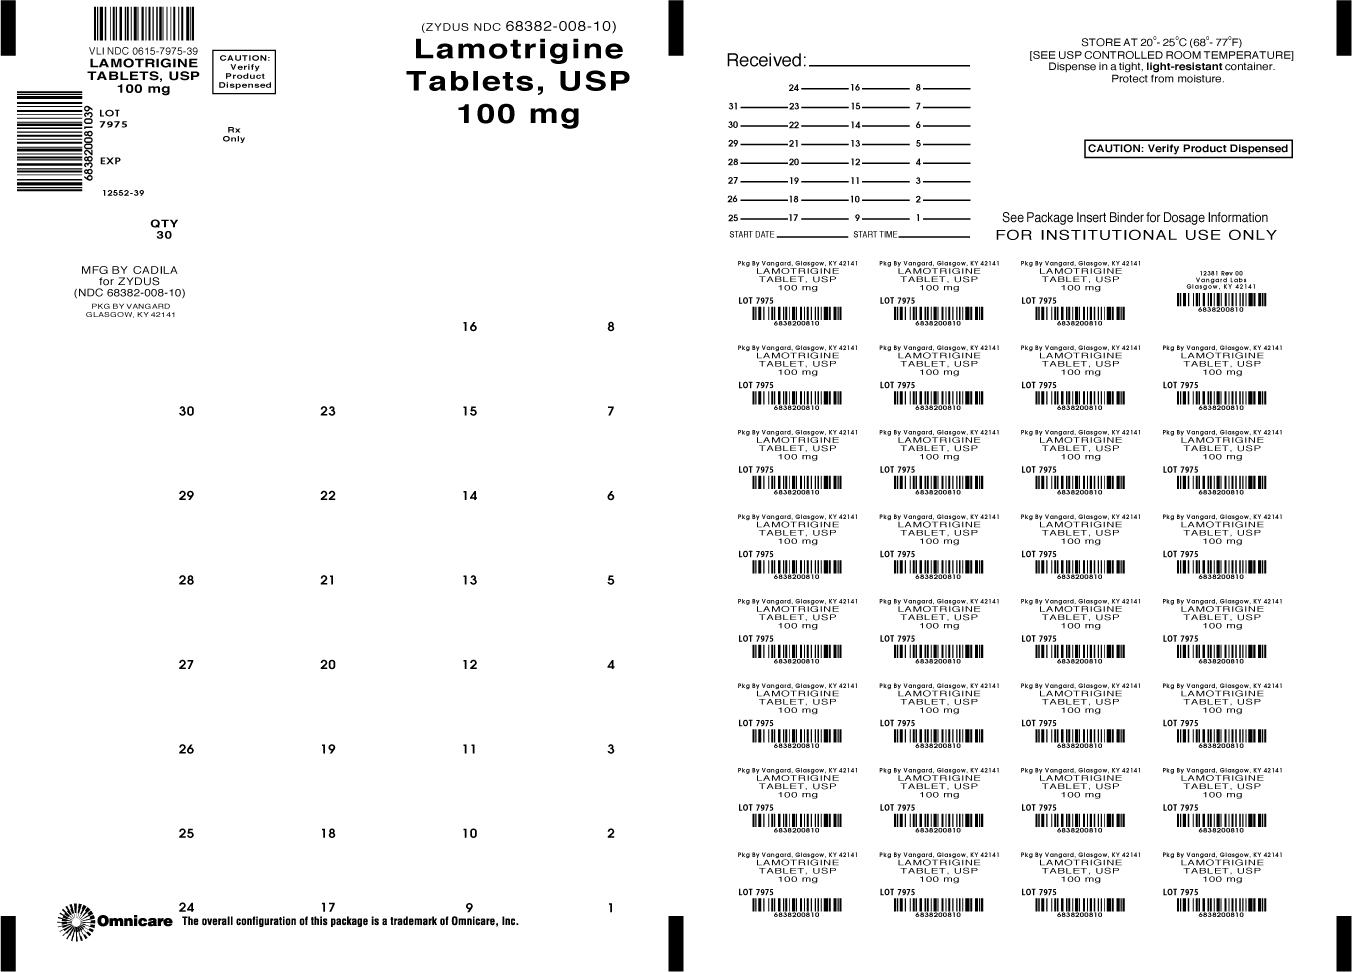 Lamotrigine 100mg bingo card label